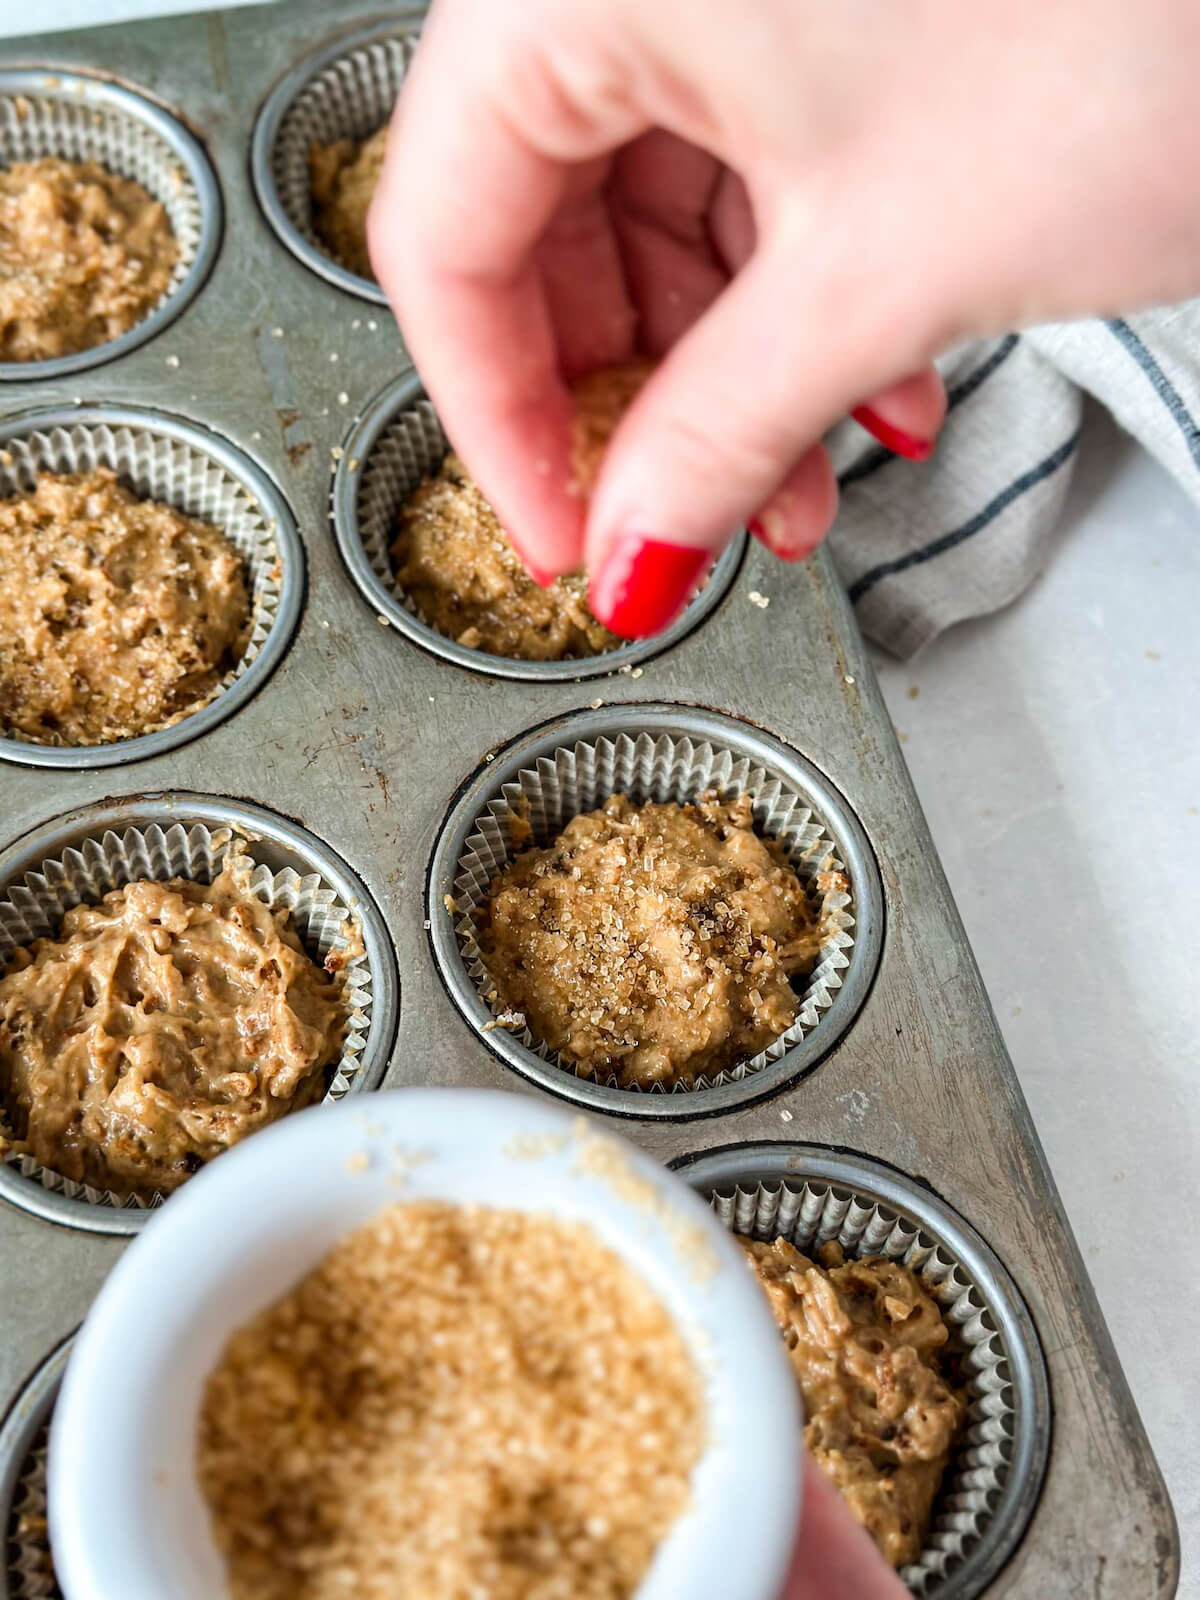 Sprinkling turbinado sugar on top of bran muffin batter in a muffin tin before baking.